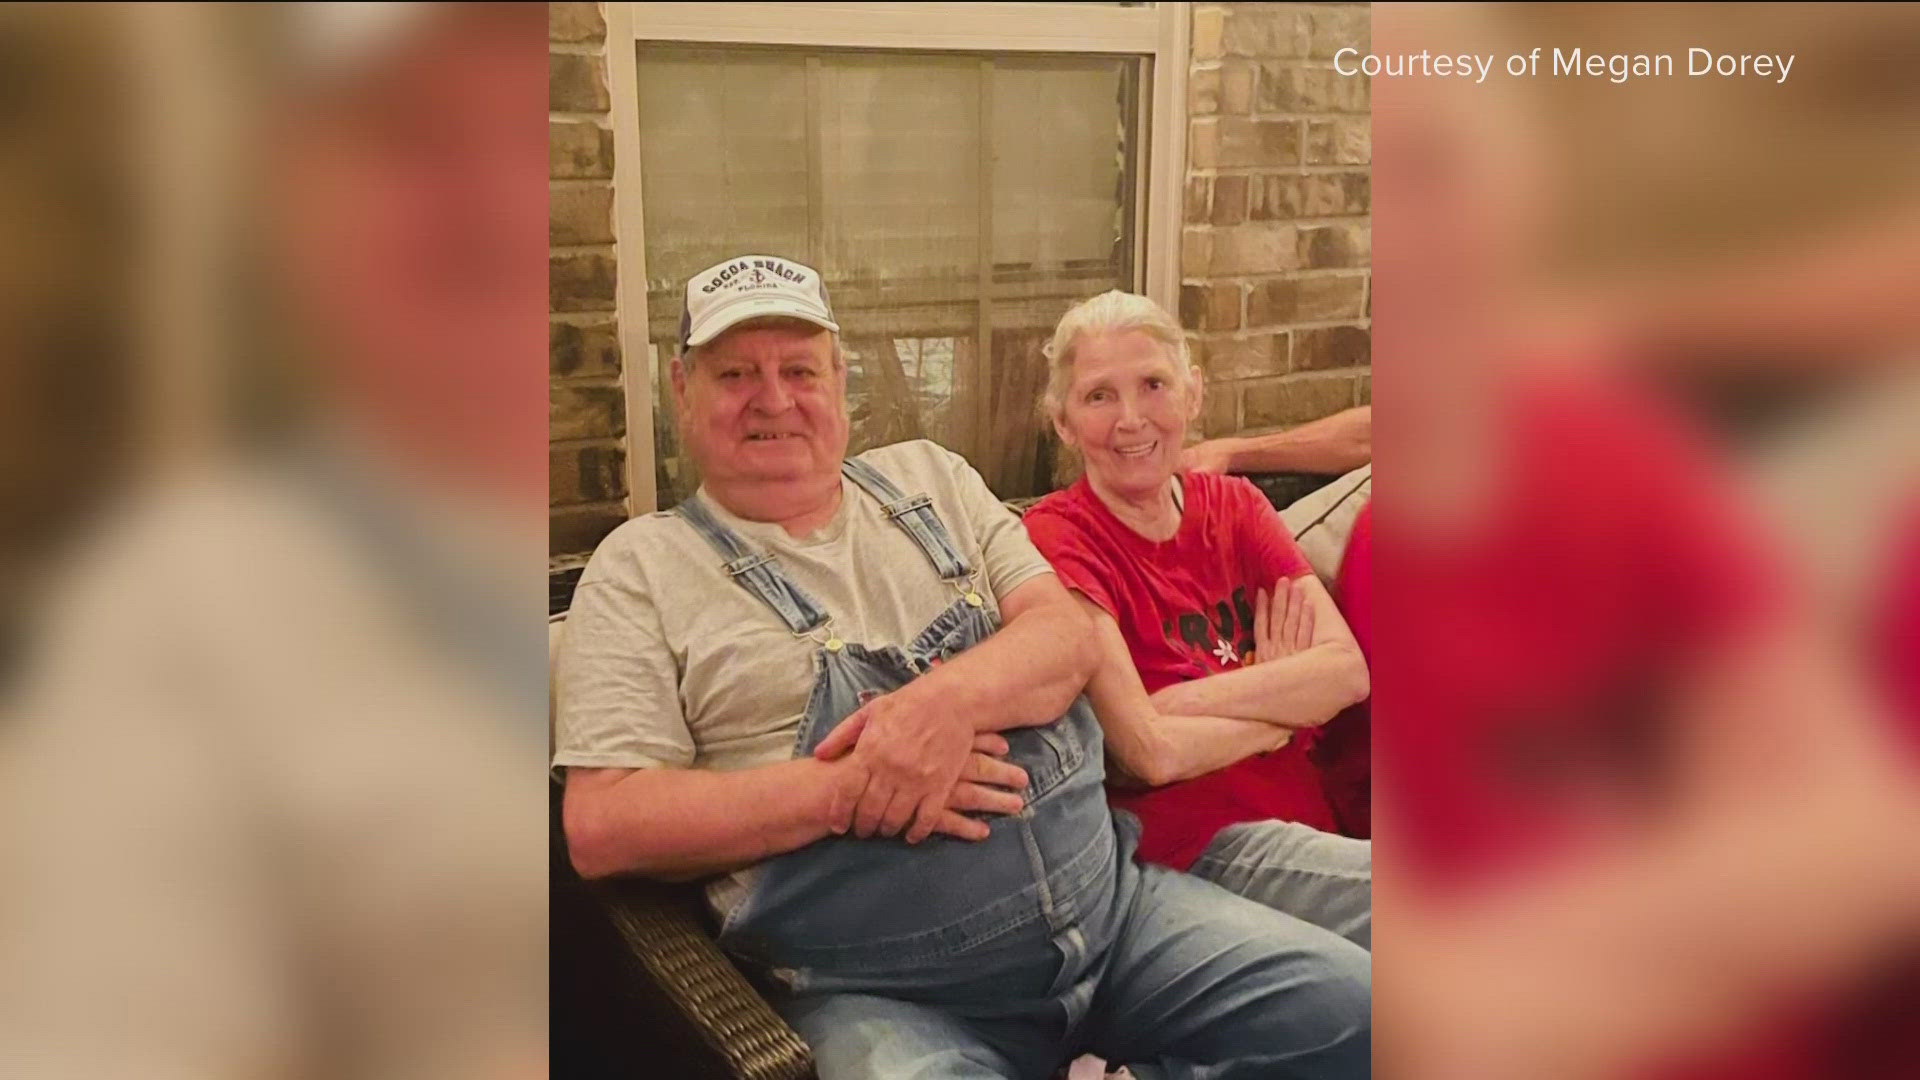 Linda Dorey had just celebrated her 63rd wedding anniversary with her husband, Paul.